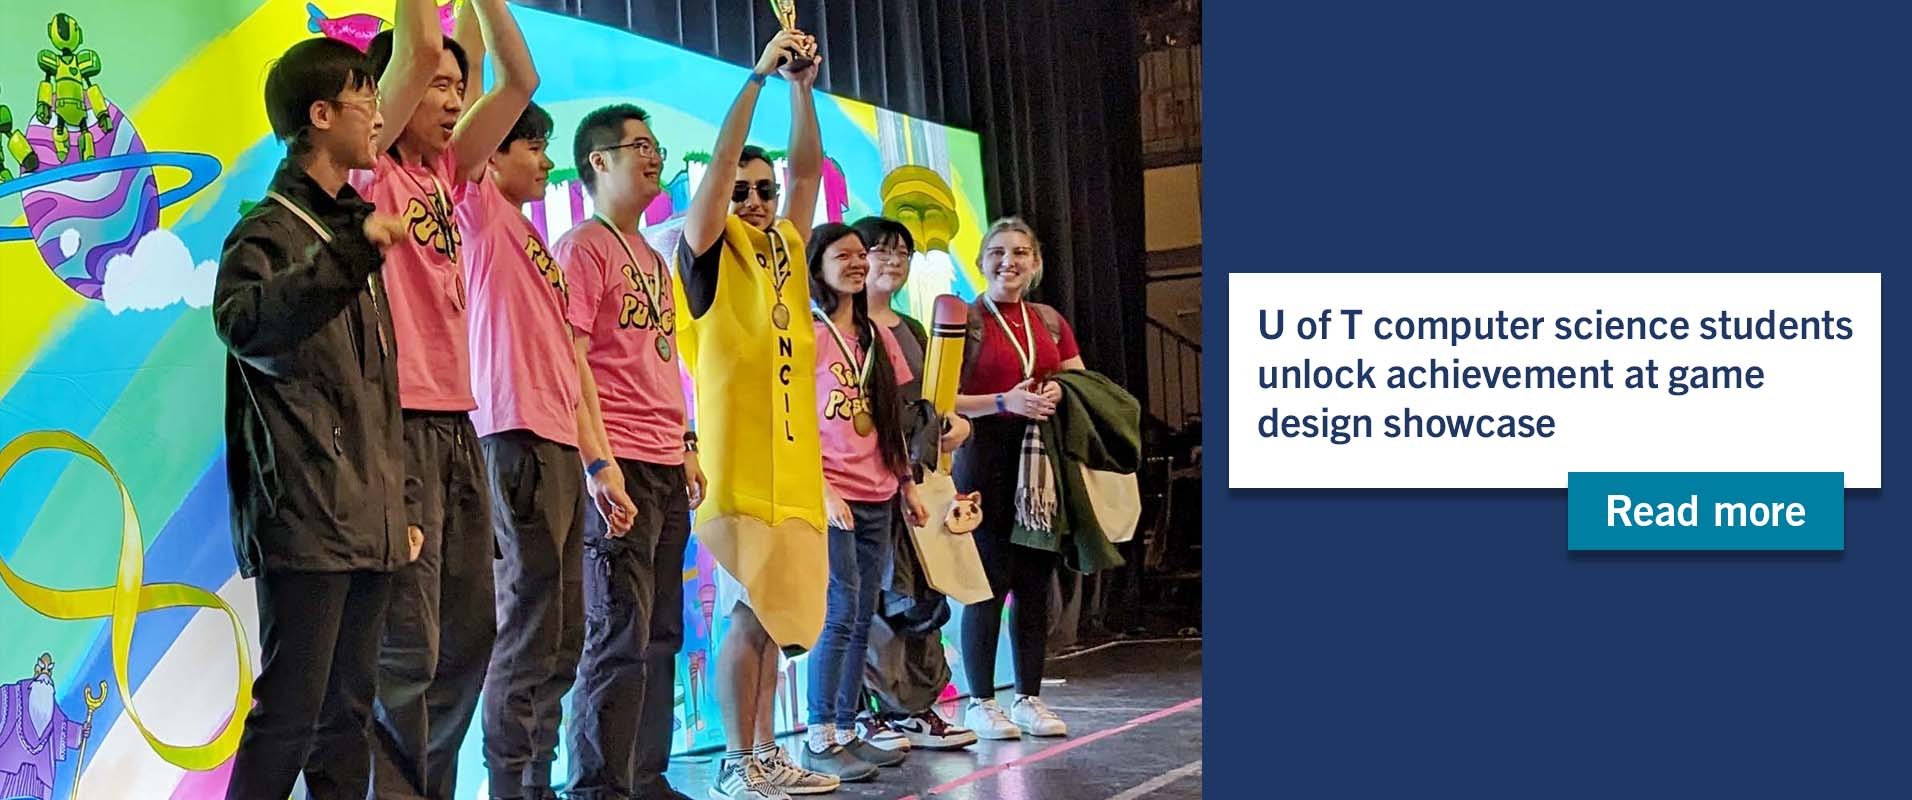 U of T computer science students unlock achievement at game design showcase